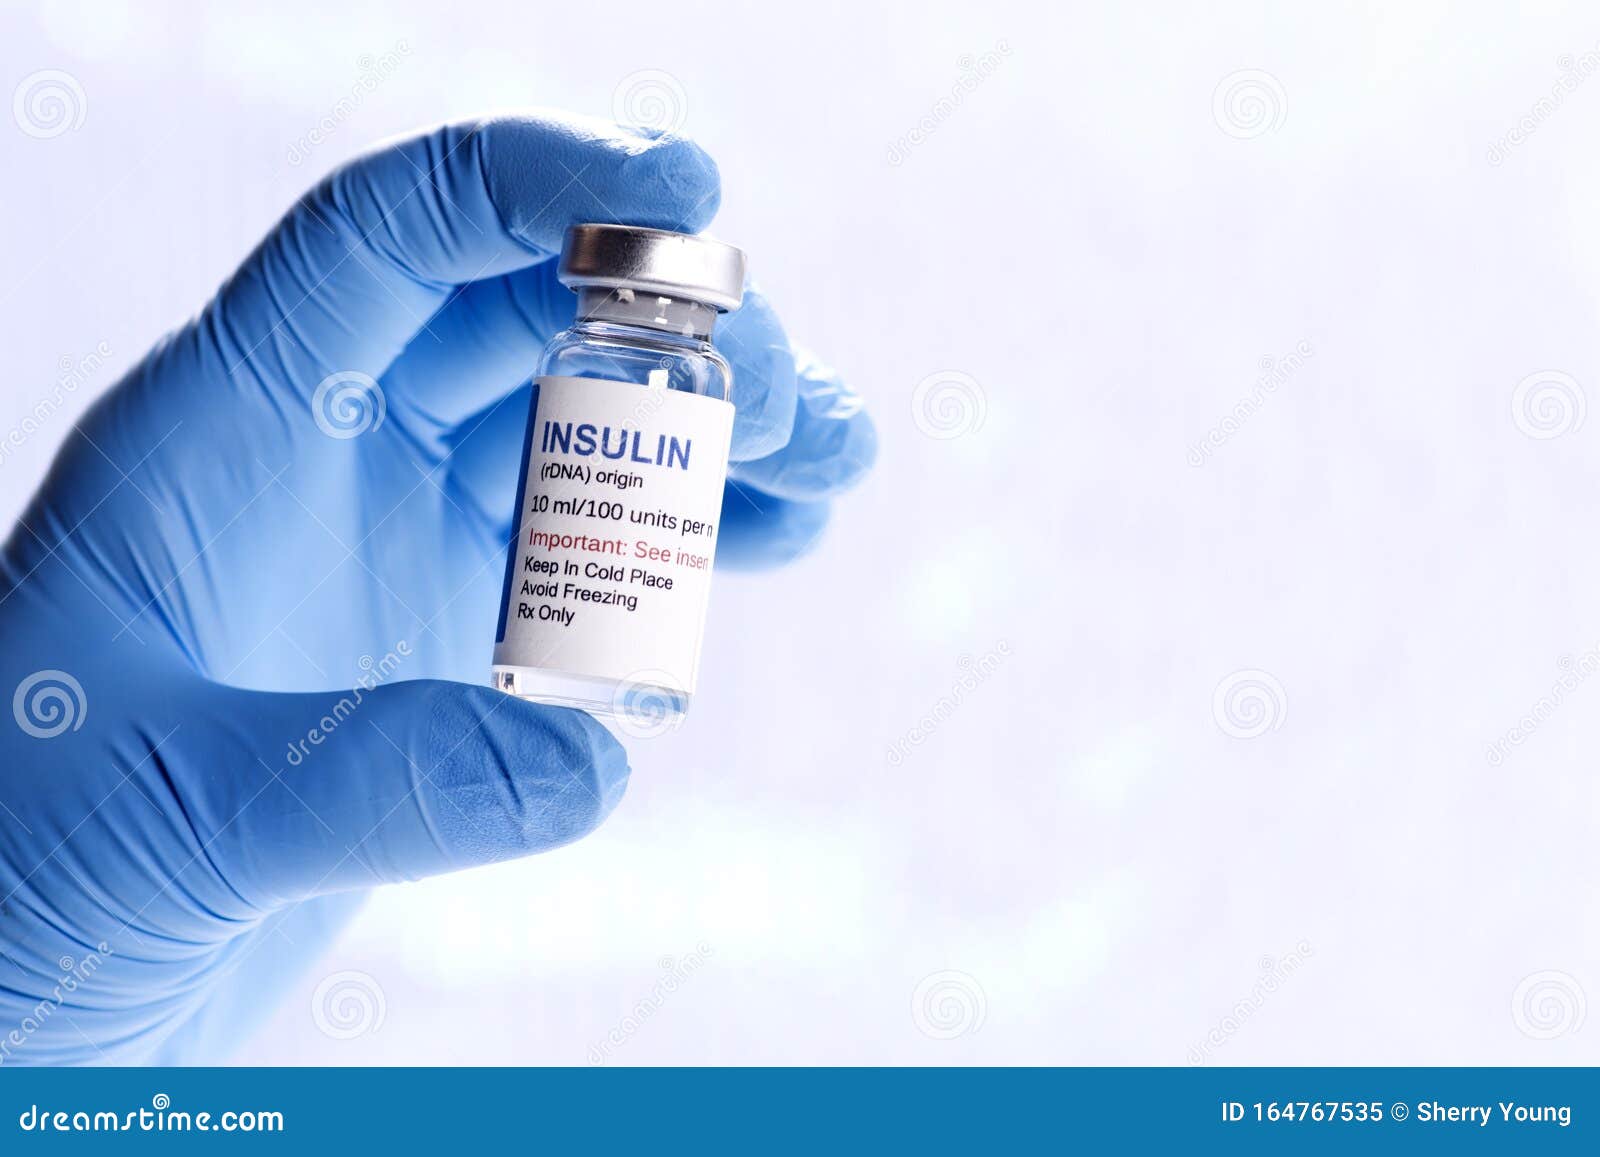 insulin vial in hand